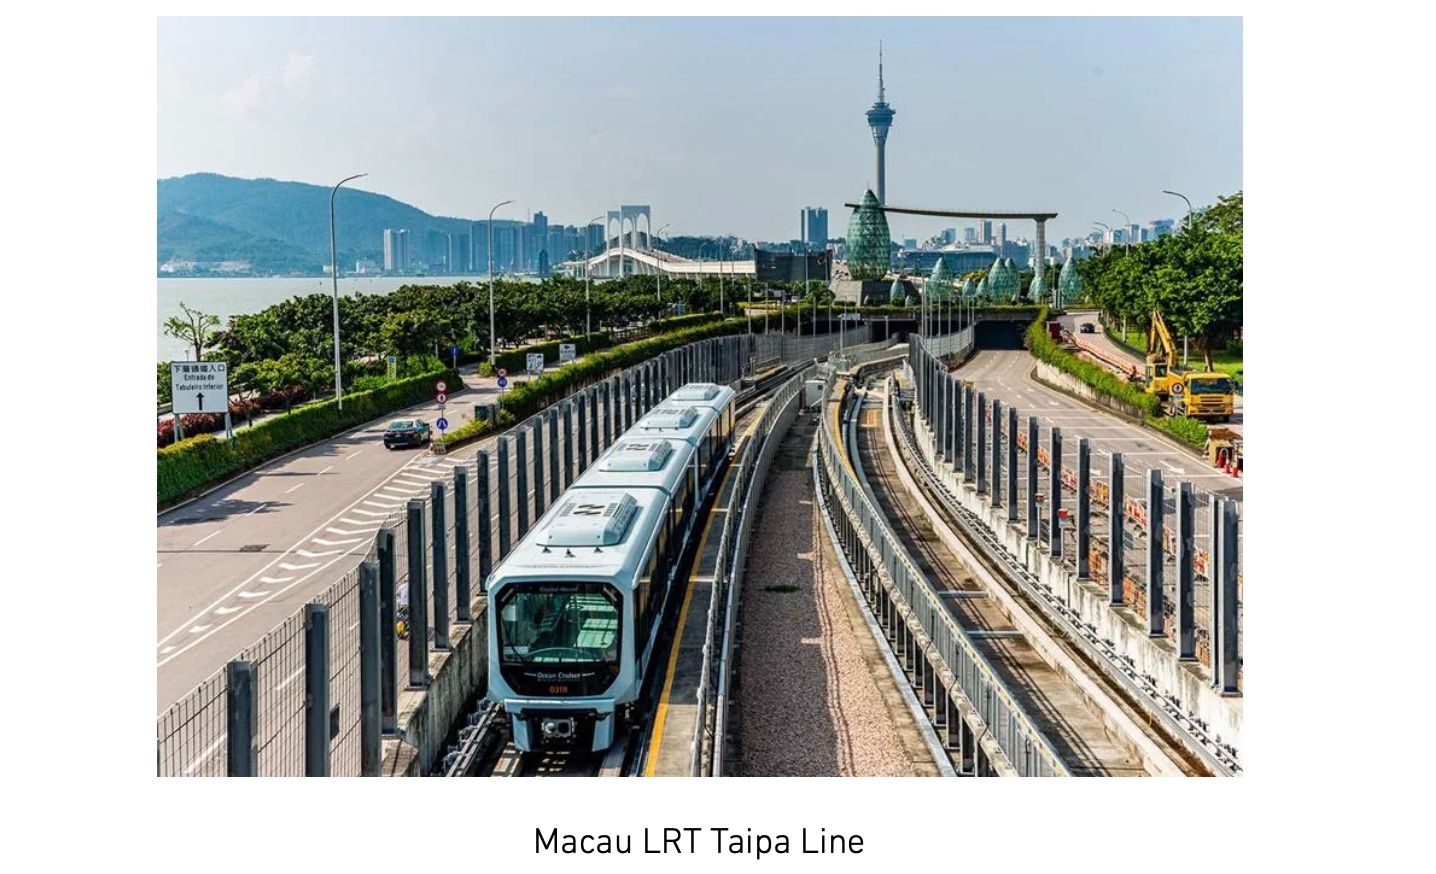 Macau LRT Barra Extension Line Begins Commercial Operations on December 8 digital innovation PlatoBlockchain Data Intelligence. Vertical Search. Ai.